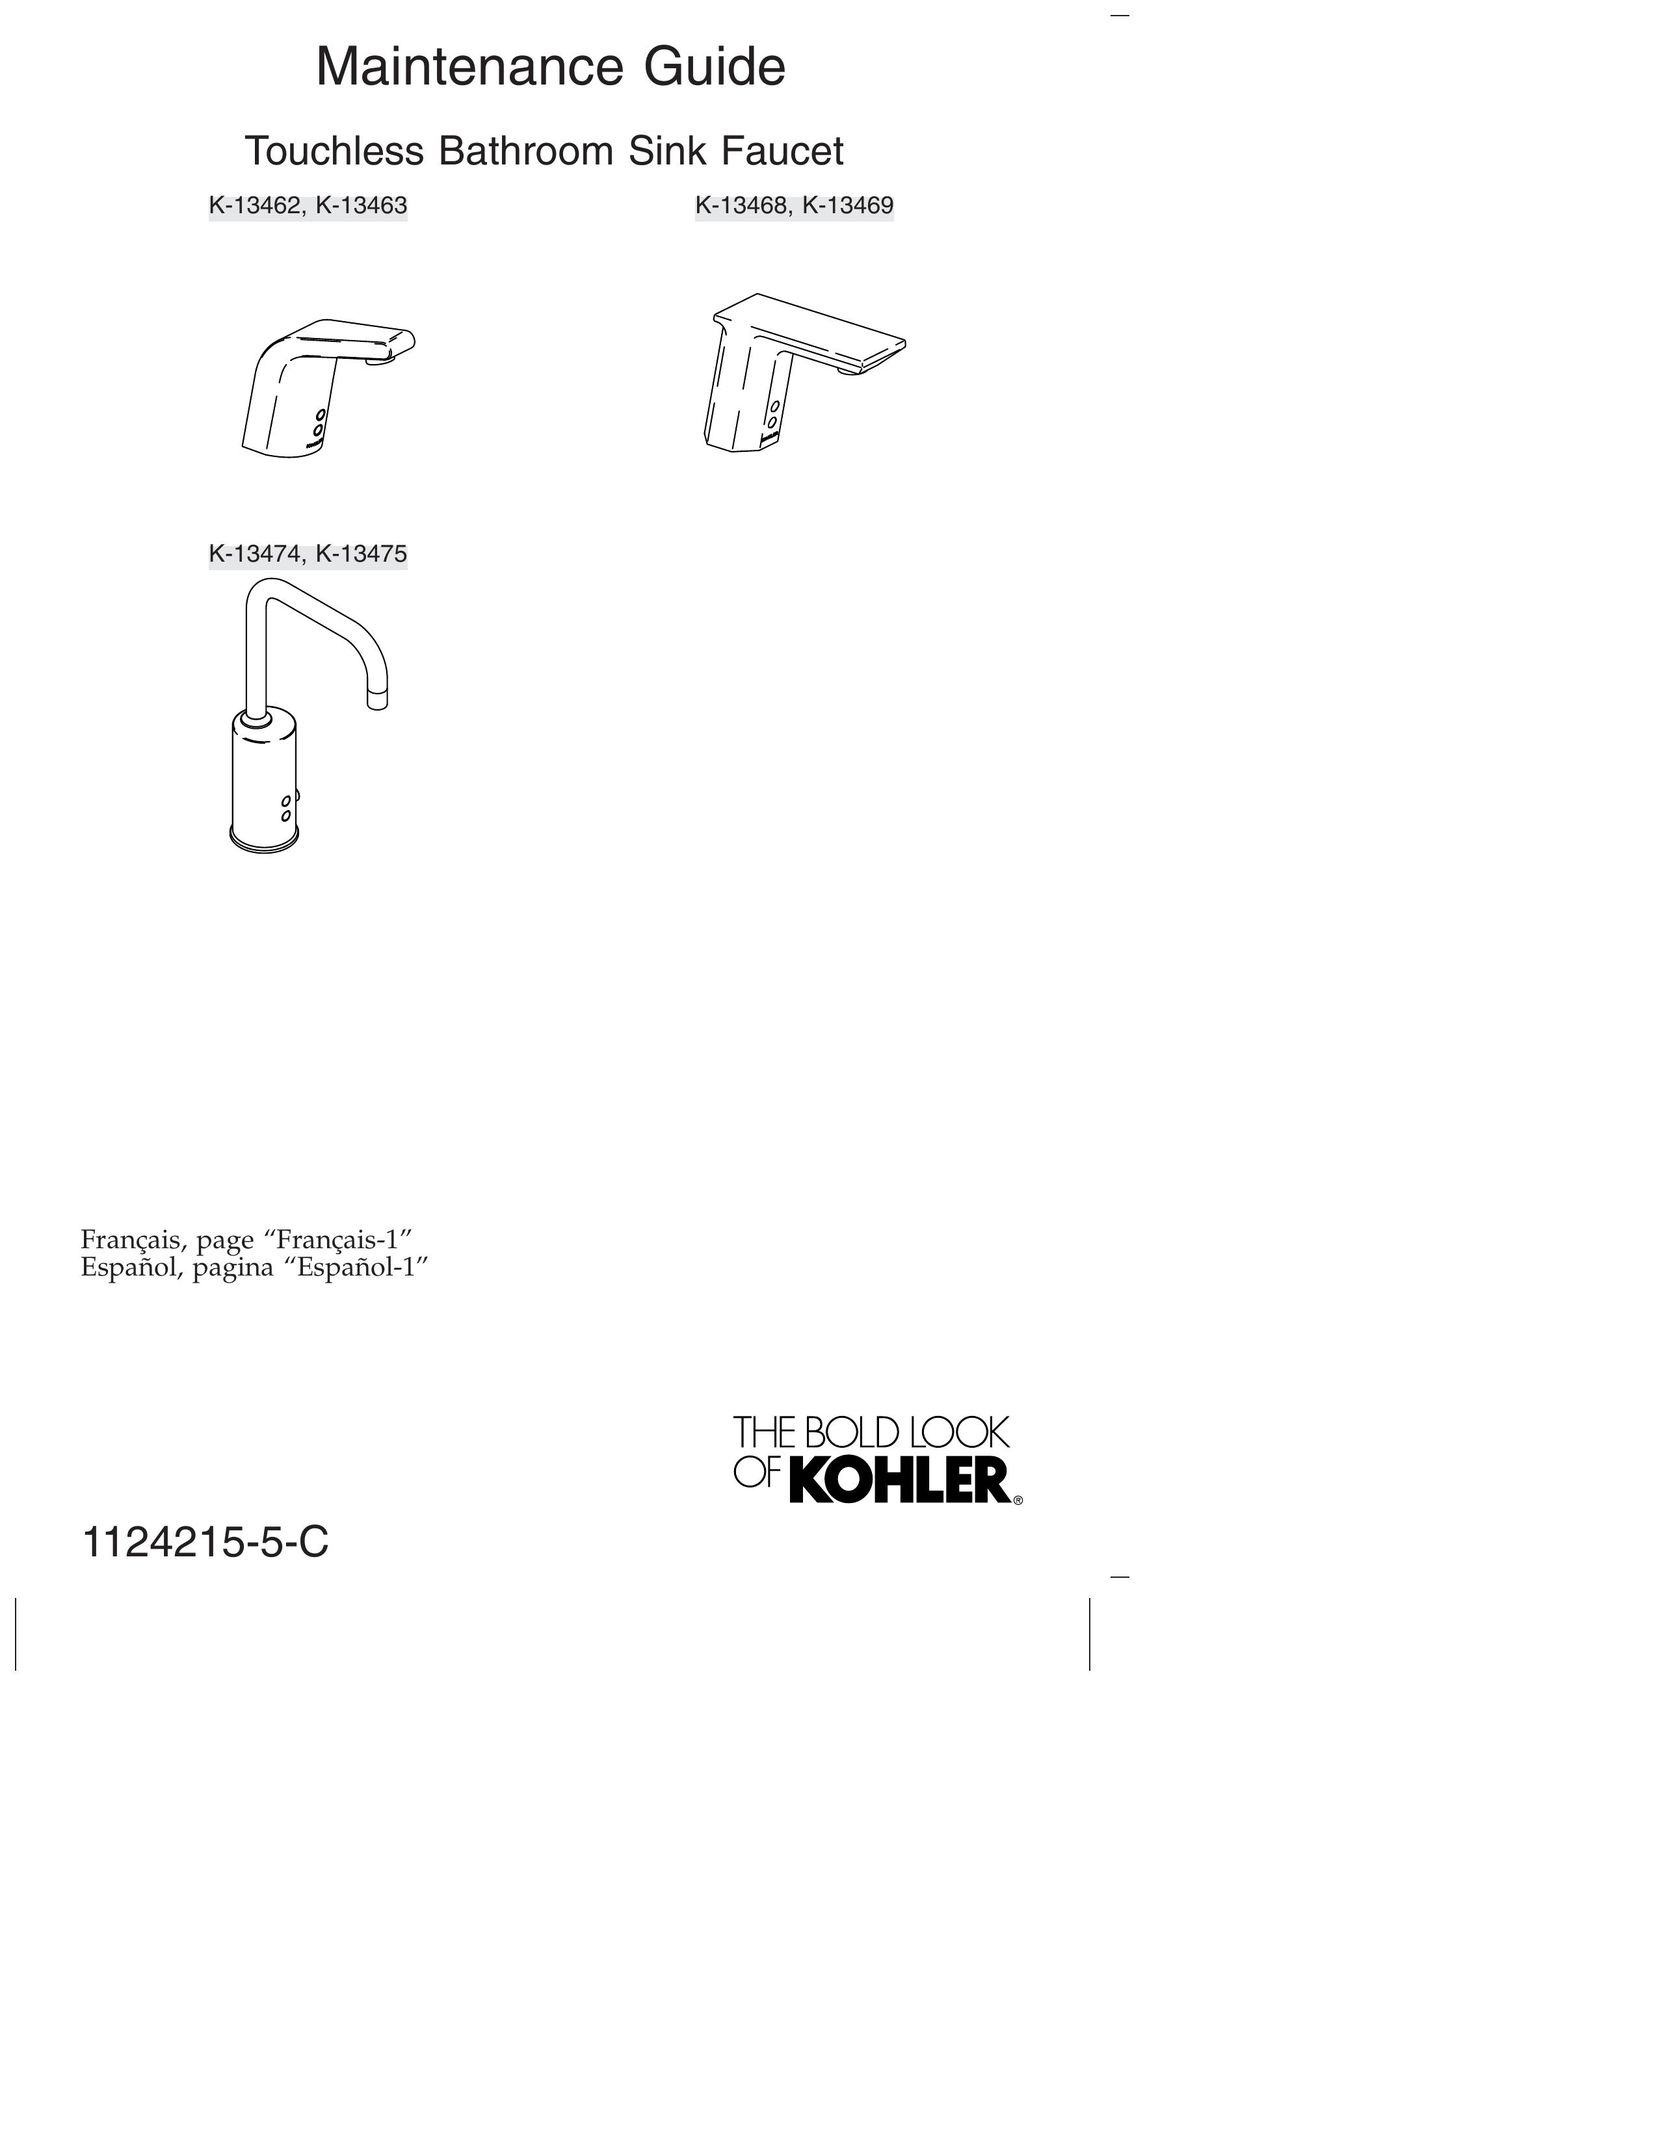 Kohler K-13469 Plumbing Product User Manual